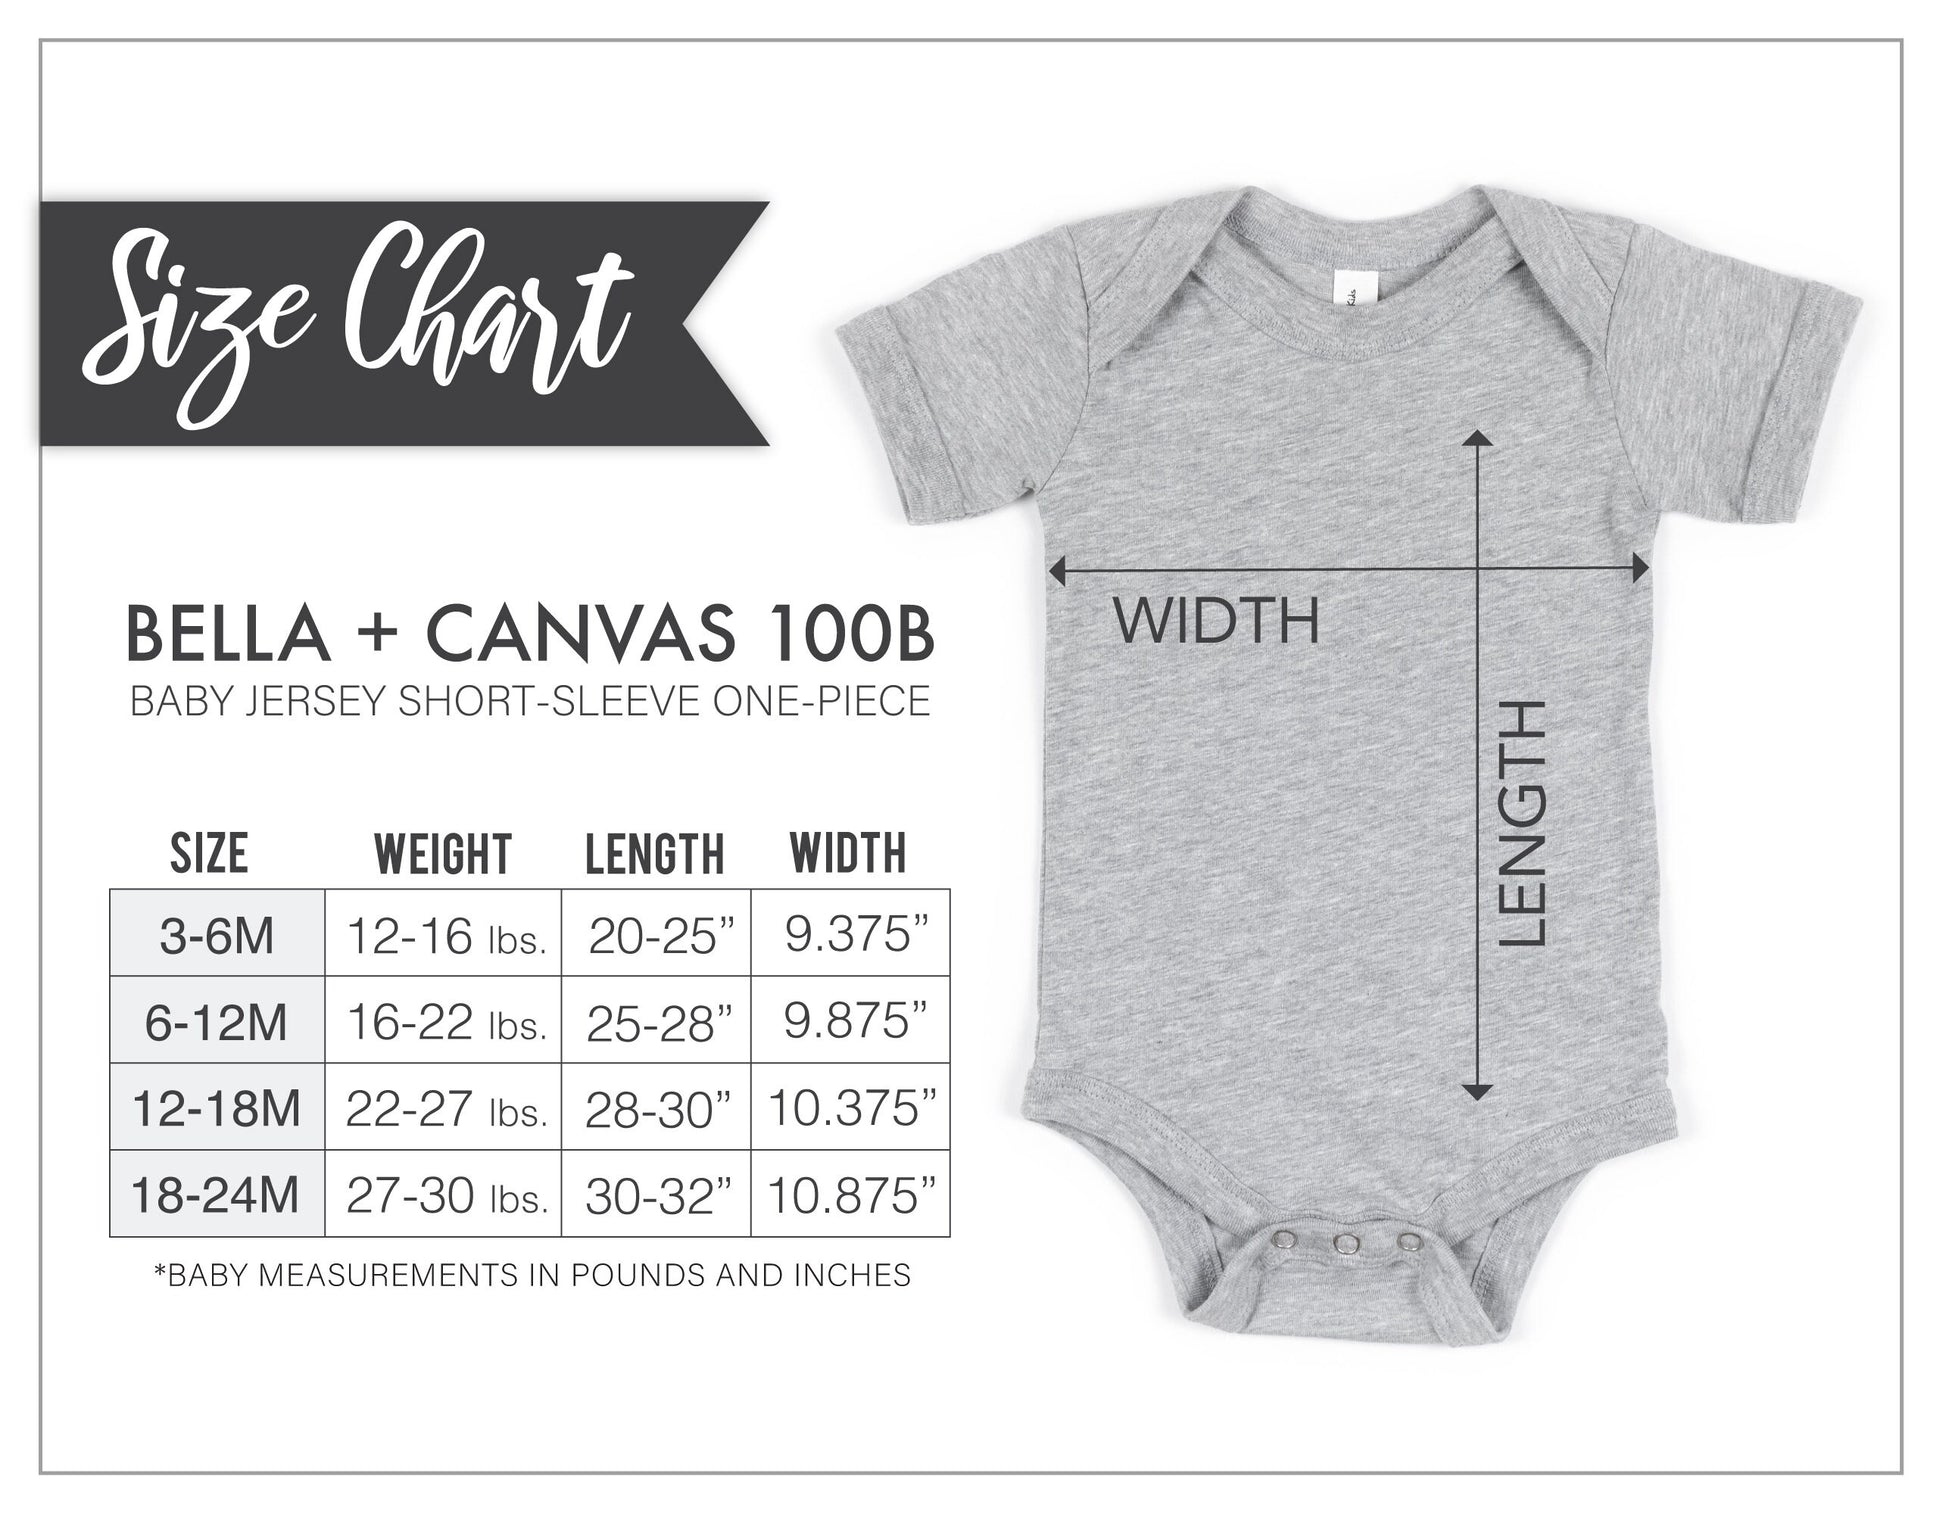 Cute Eh or Toddler Shirt or Bodysuit - Cute Baby Bodysuit - Canadian Baby